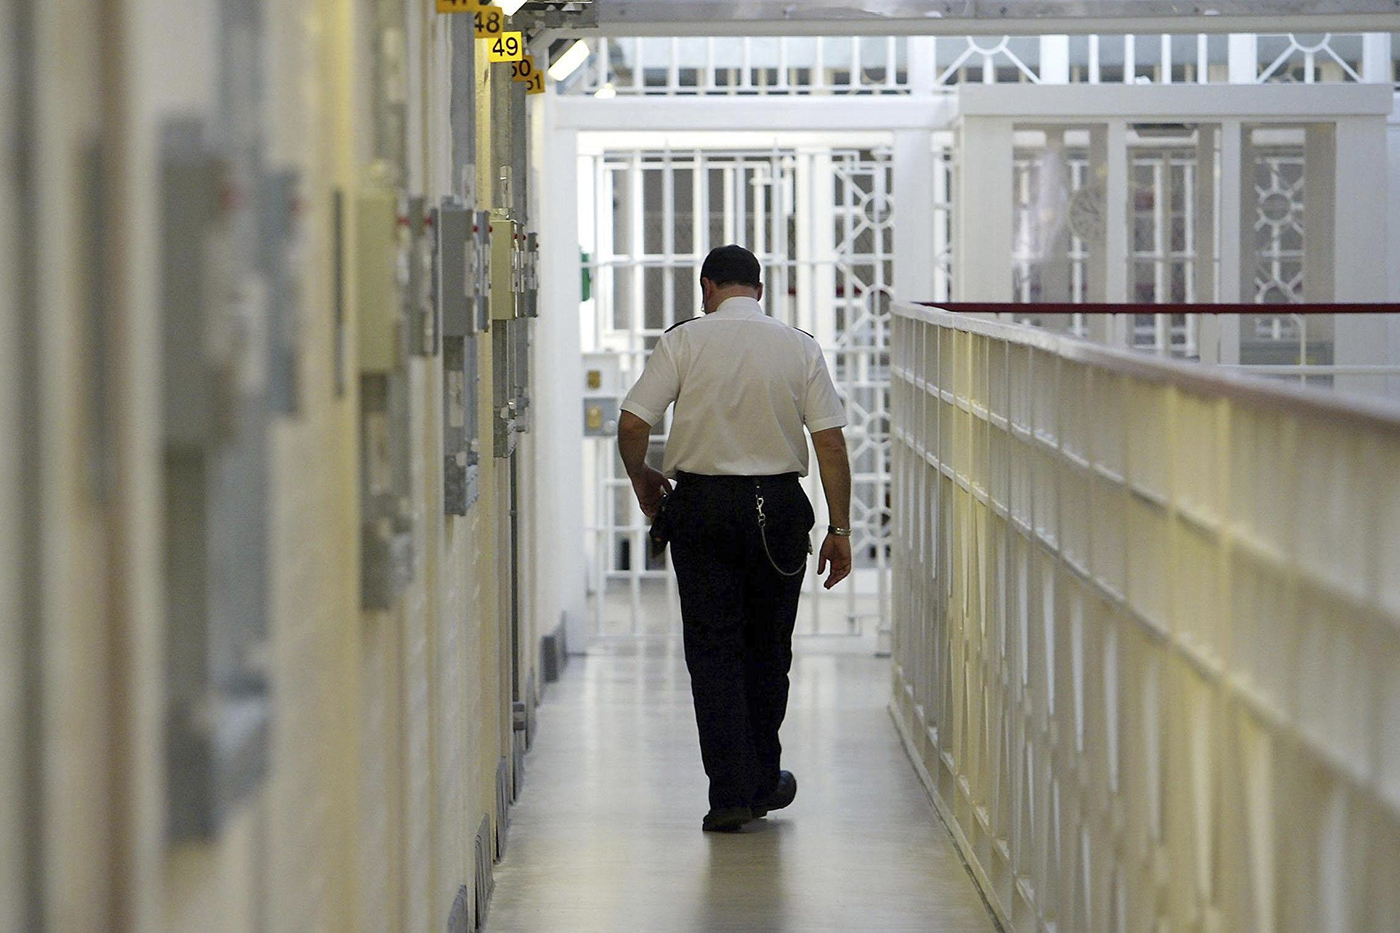 Prison guard walks down a hallway of cells.